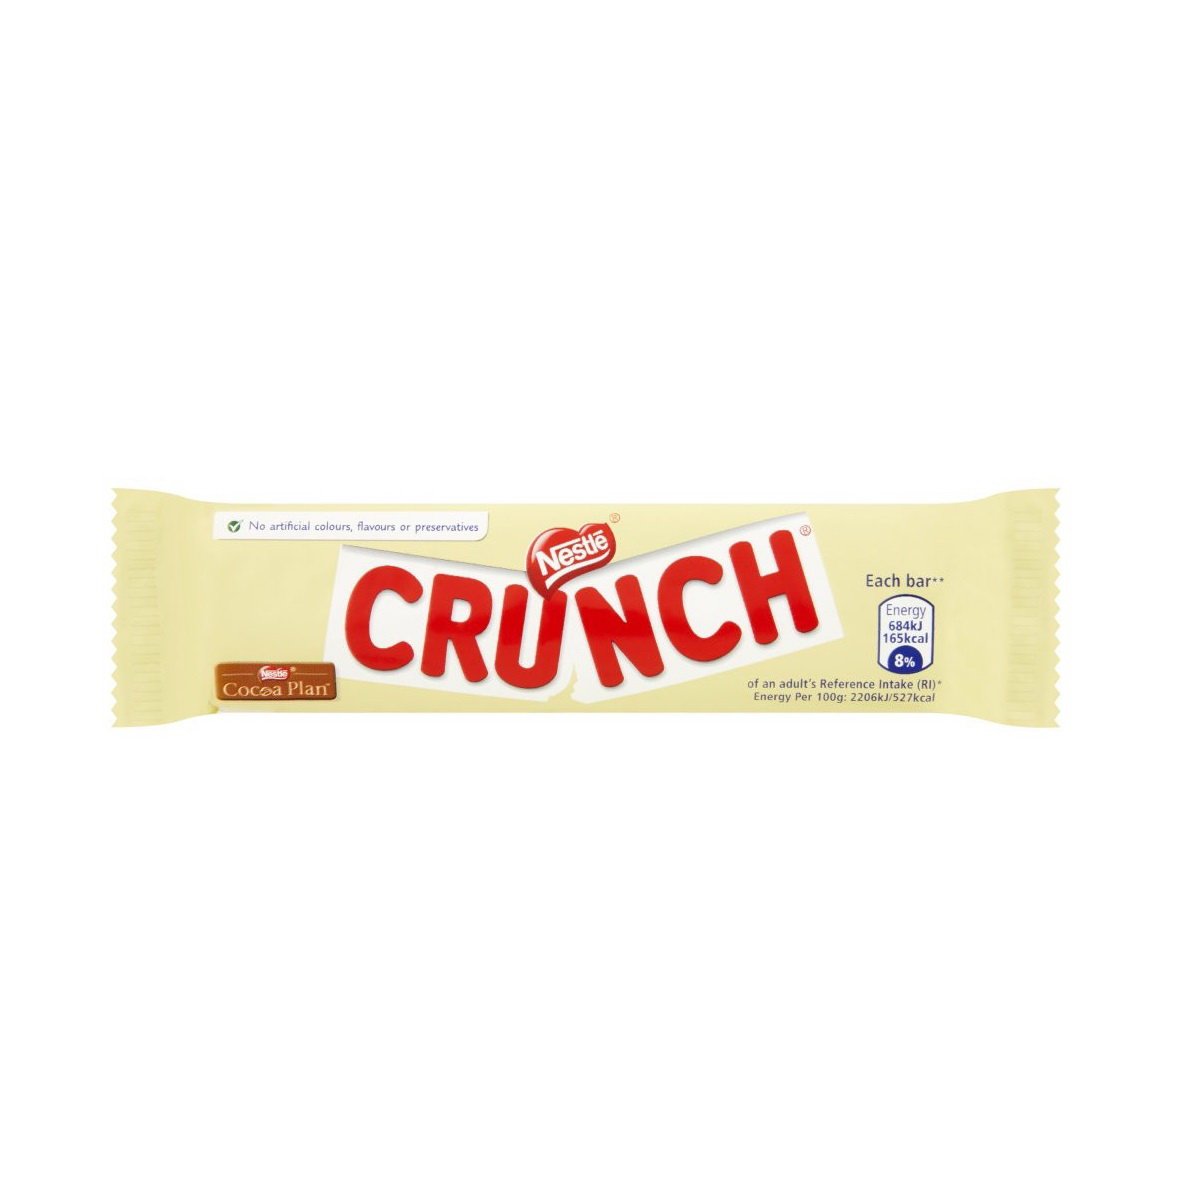 CRUNCH Chocolate Bar